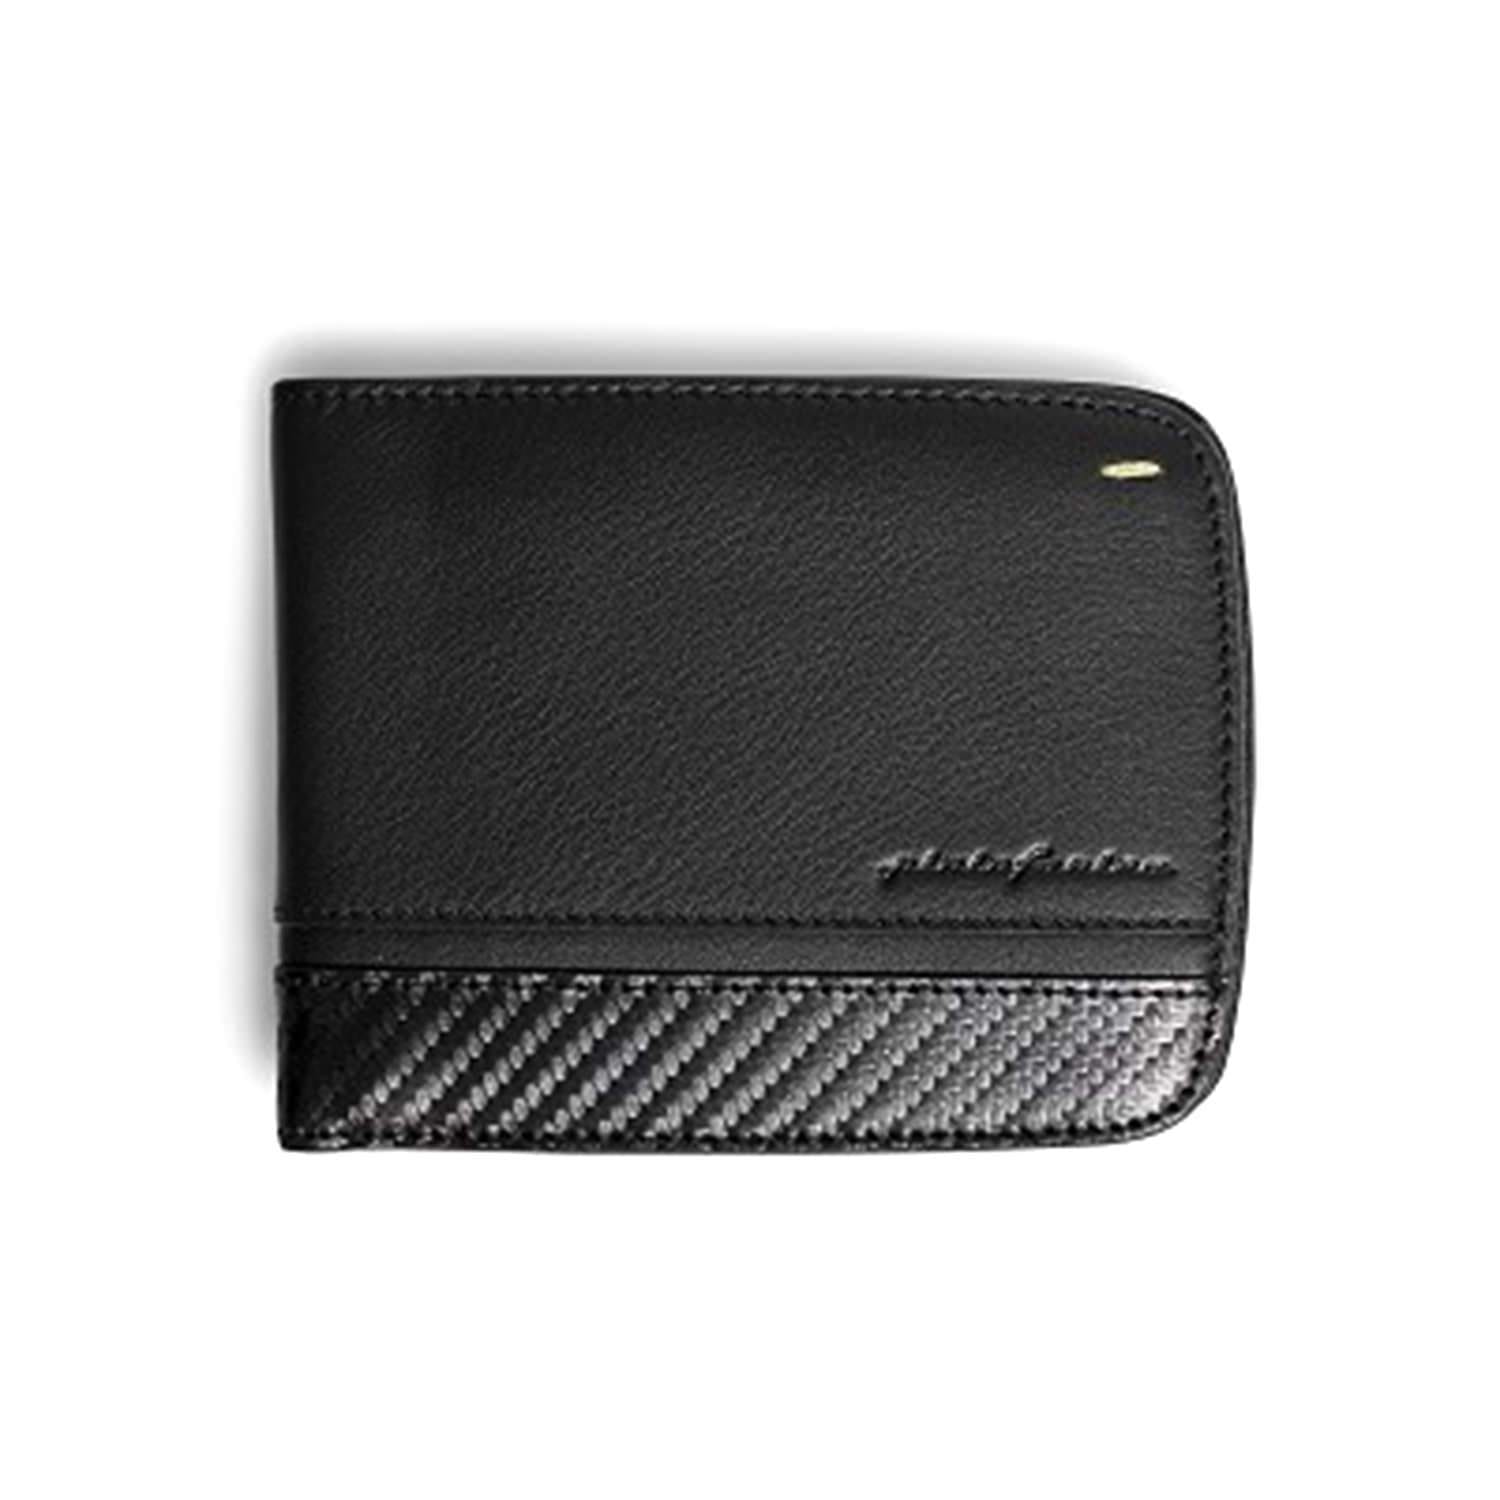 Pininfarina Folio Leather Wallet - Carbon - NPKFL00313 - Jashanmal Home